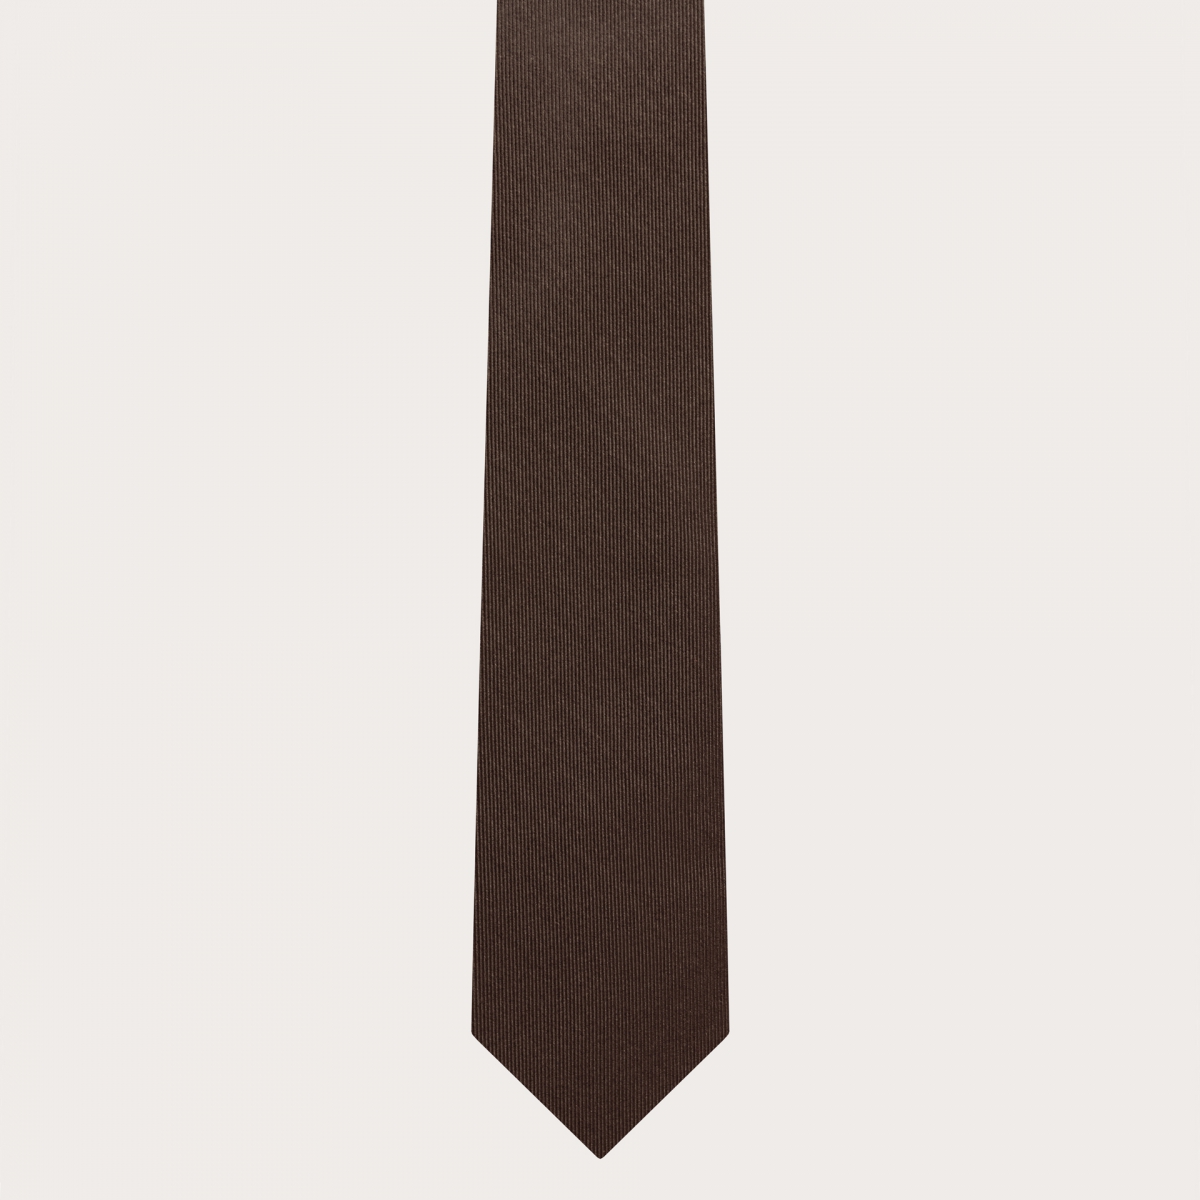 BRULCLE Elegant set of suspenders, necktie and pocket square in brown